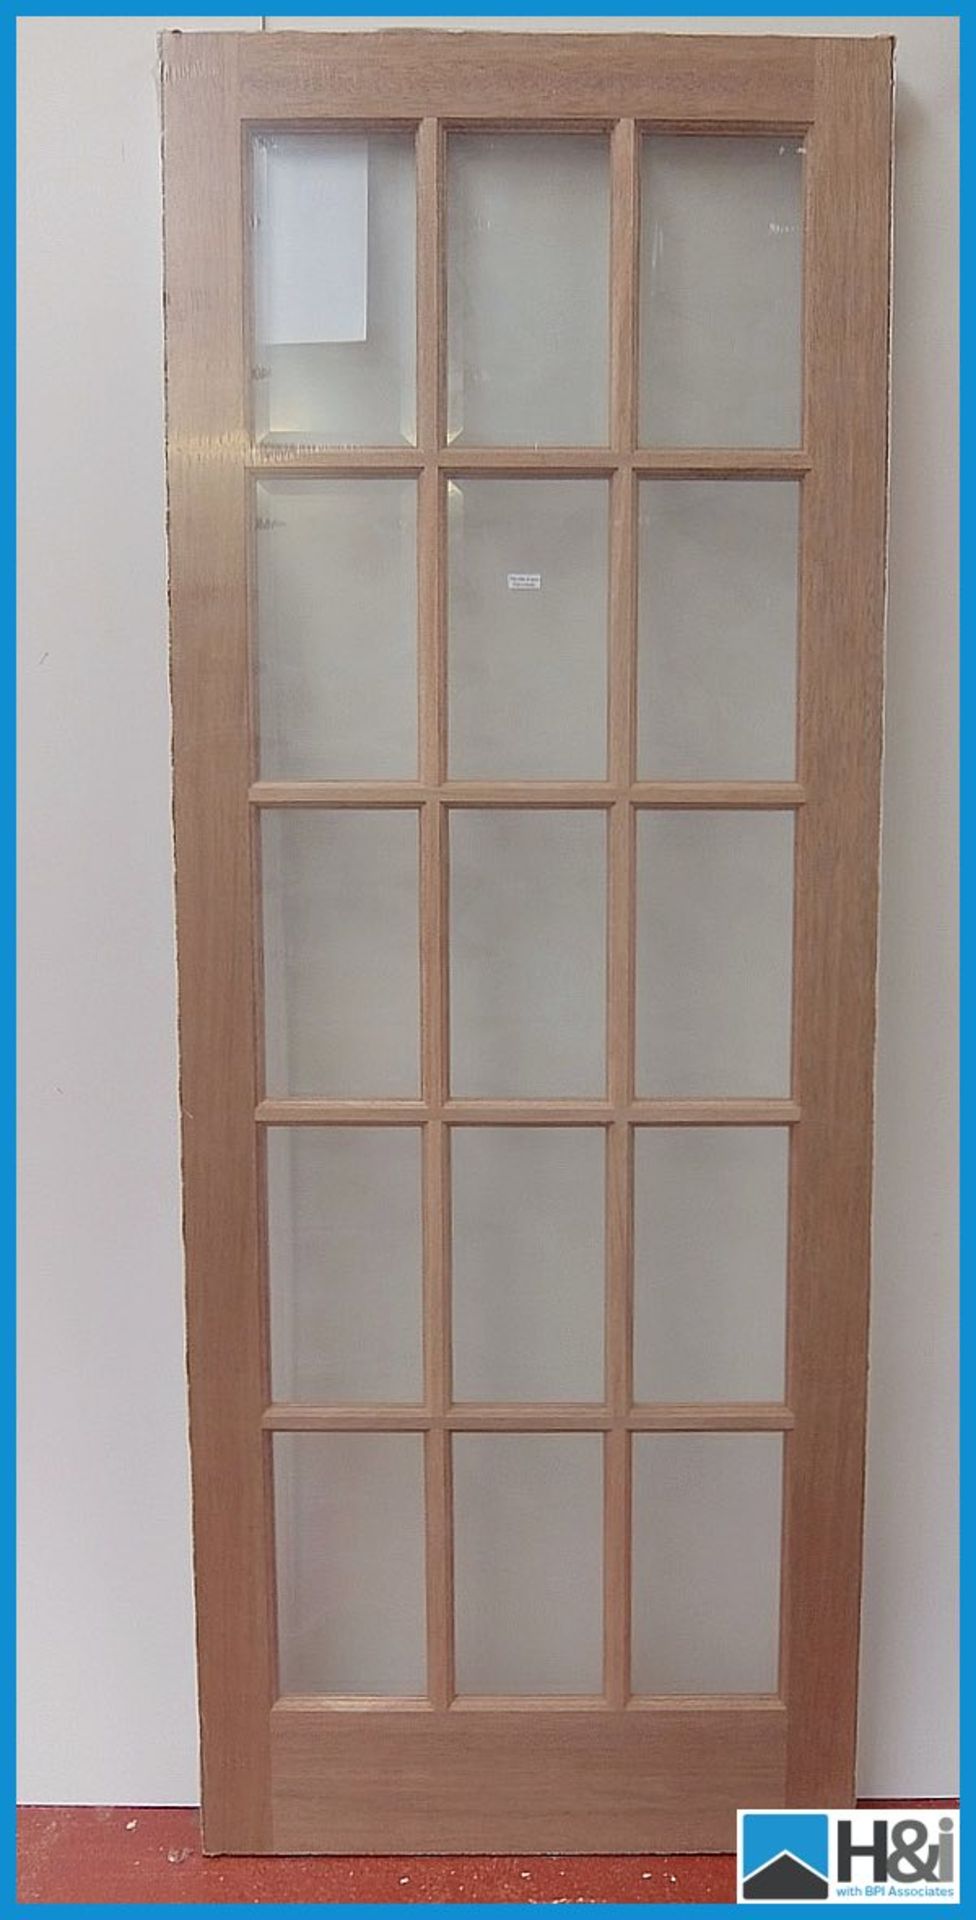 2ft 3in (78x27") SA internal hardwood SA77 15 pane clear bevelled glass internal door doors.